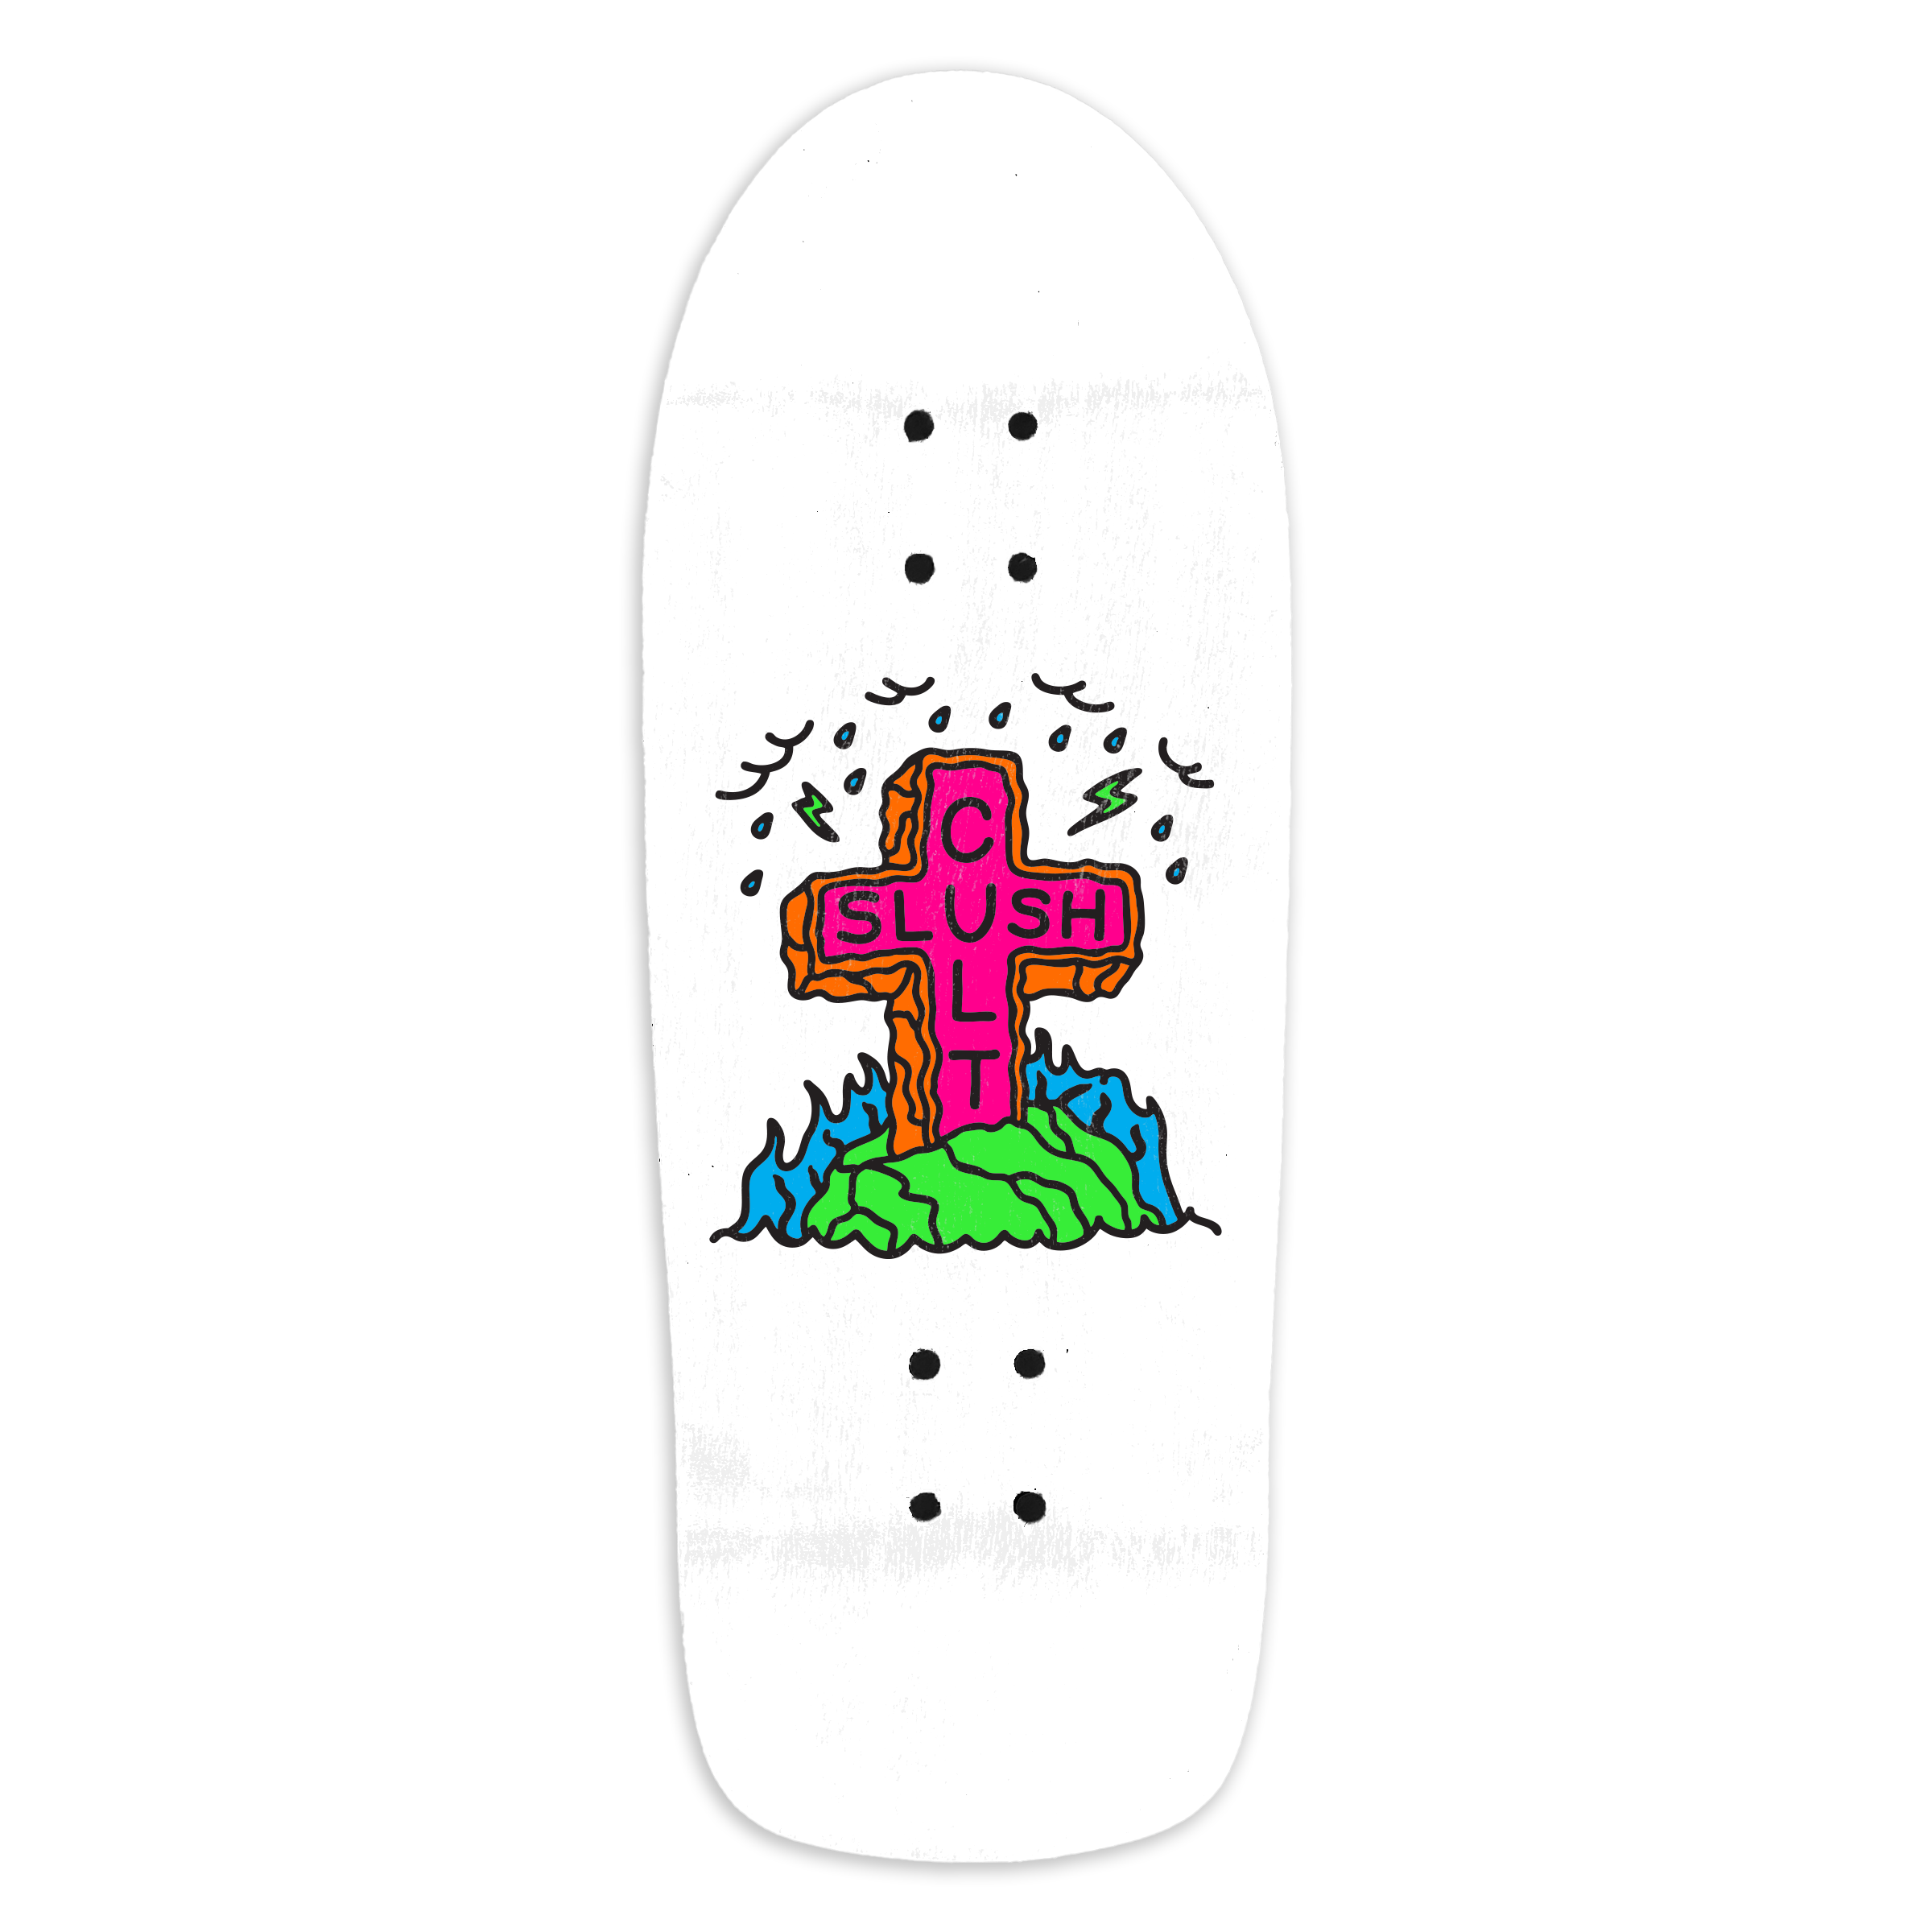 Slushcult "Cross" Pro Fingerboard Deck MINI Skate Shop Slushcult Shred Stick   Slushcult